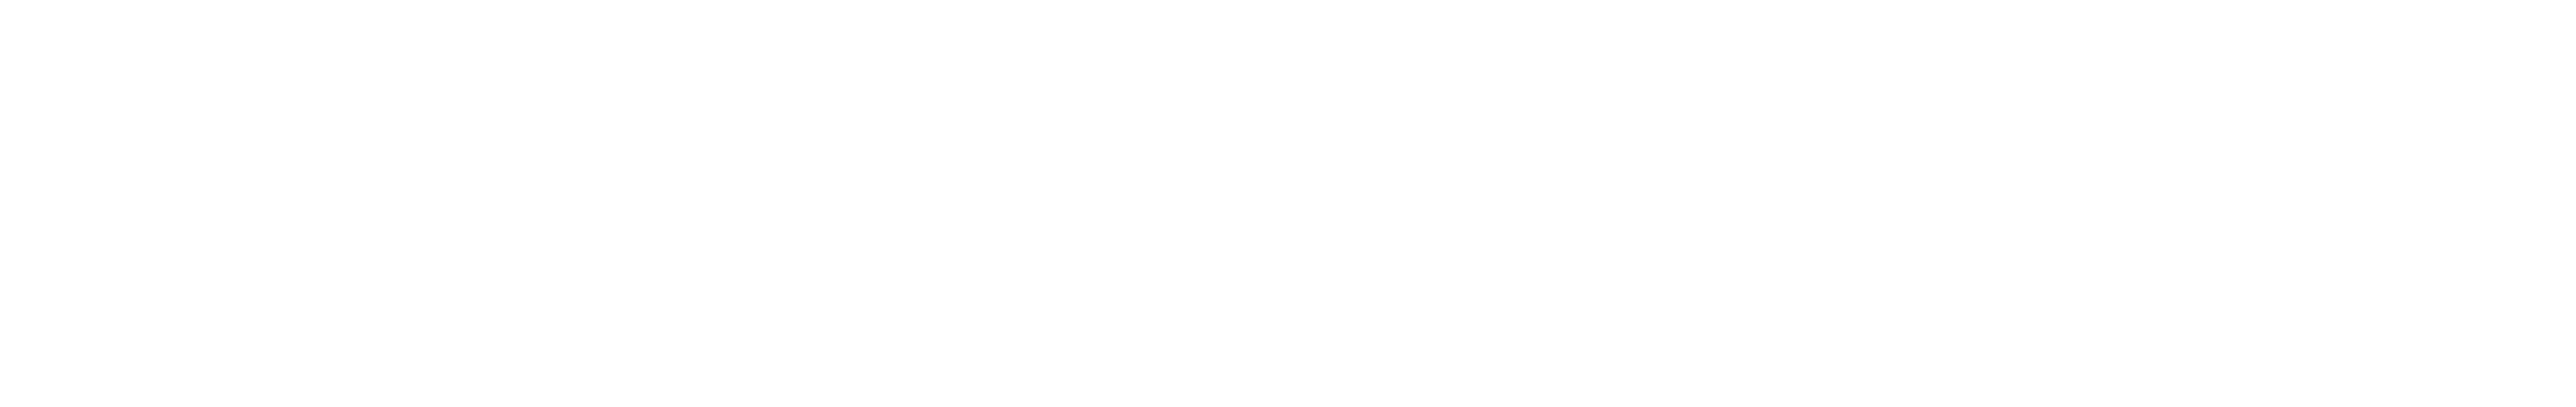 The Patron's Club